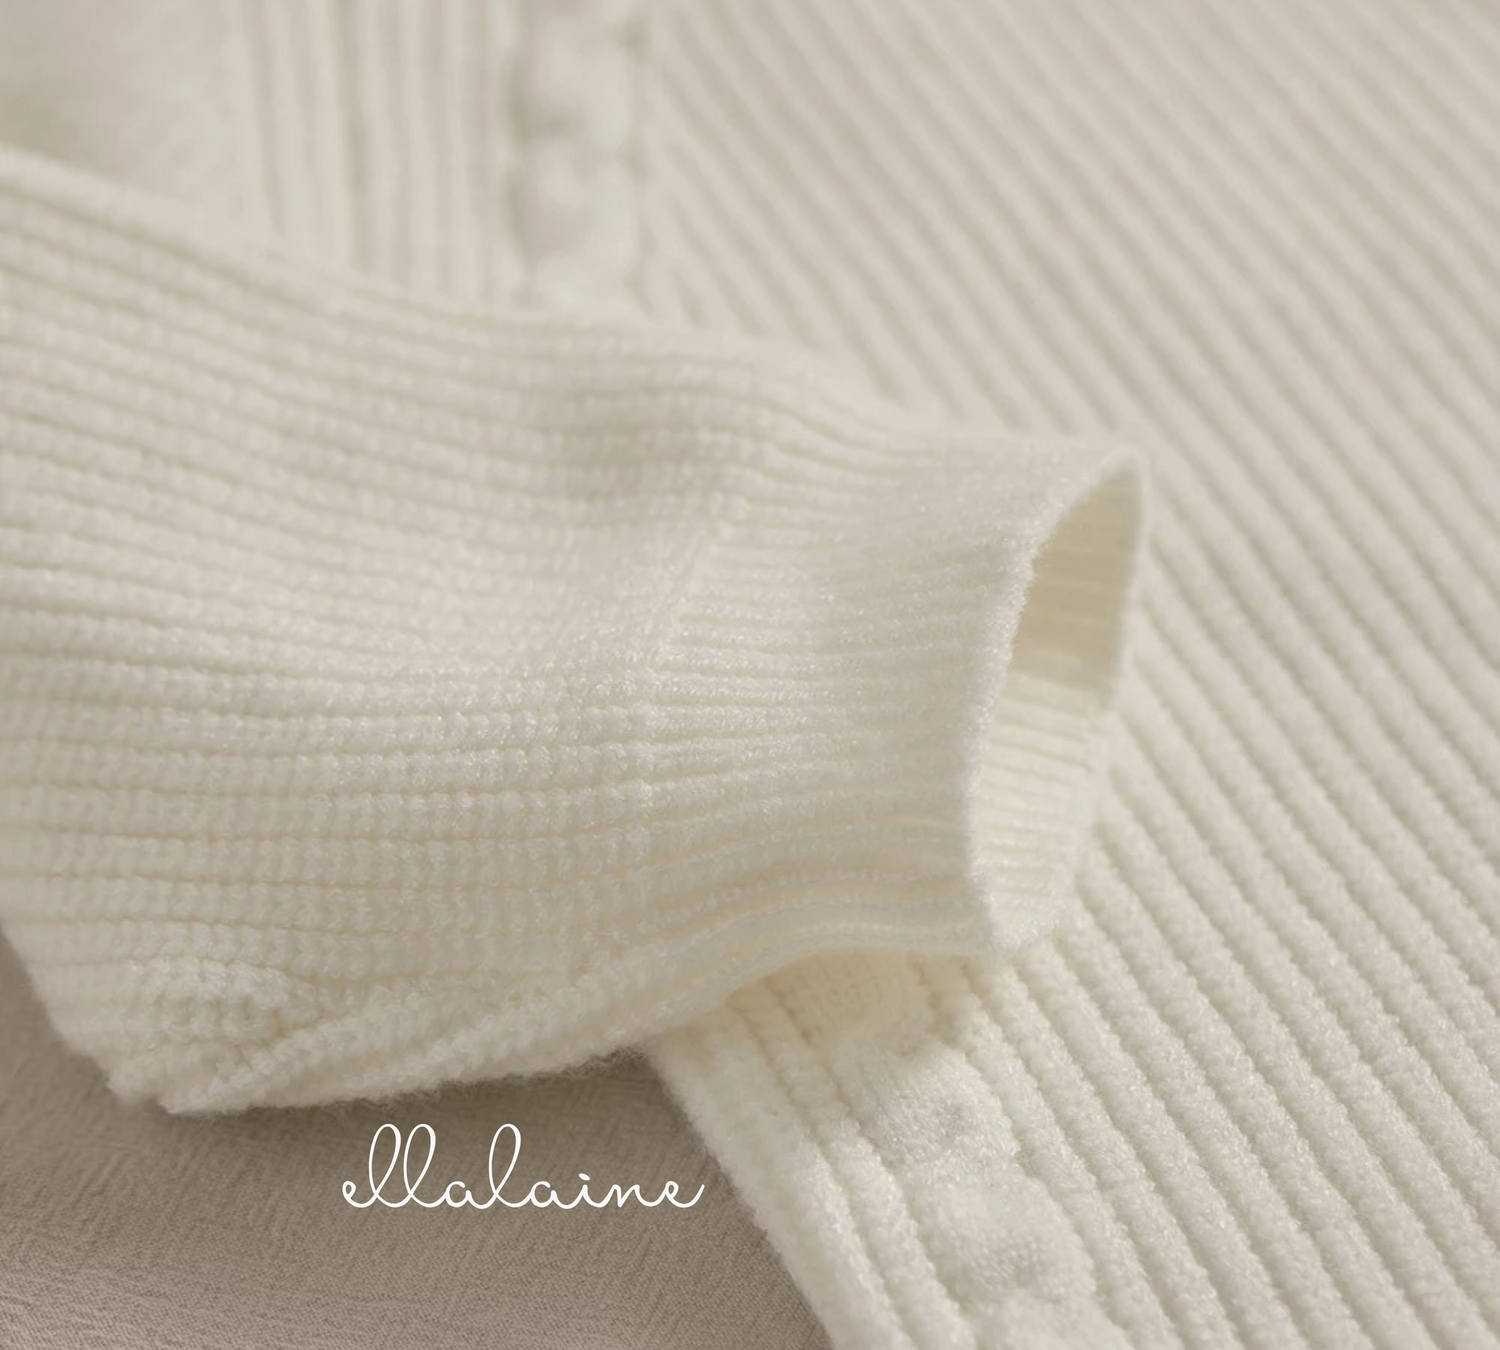 Chunky Knit Sweater Romper - EllaLaine